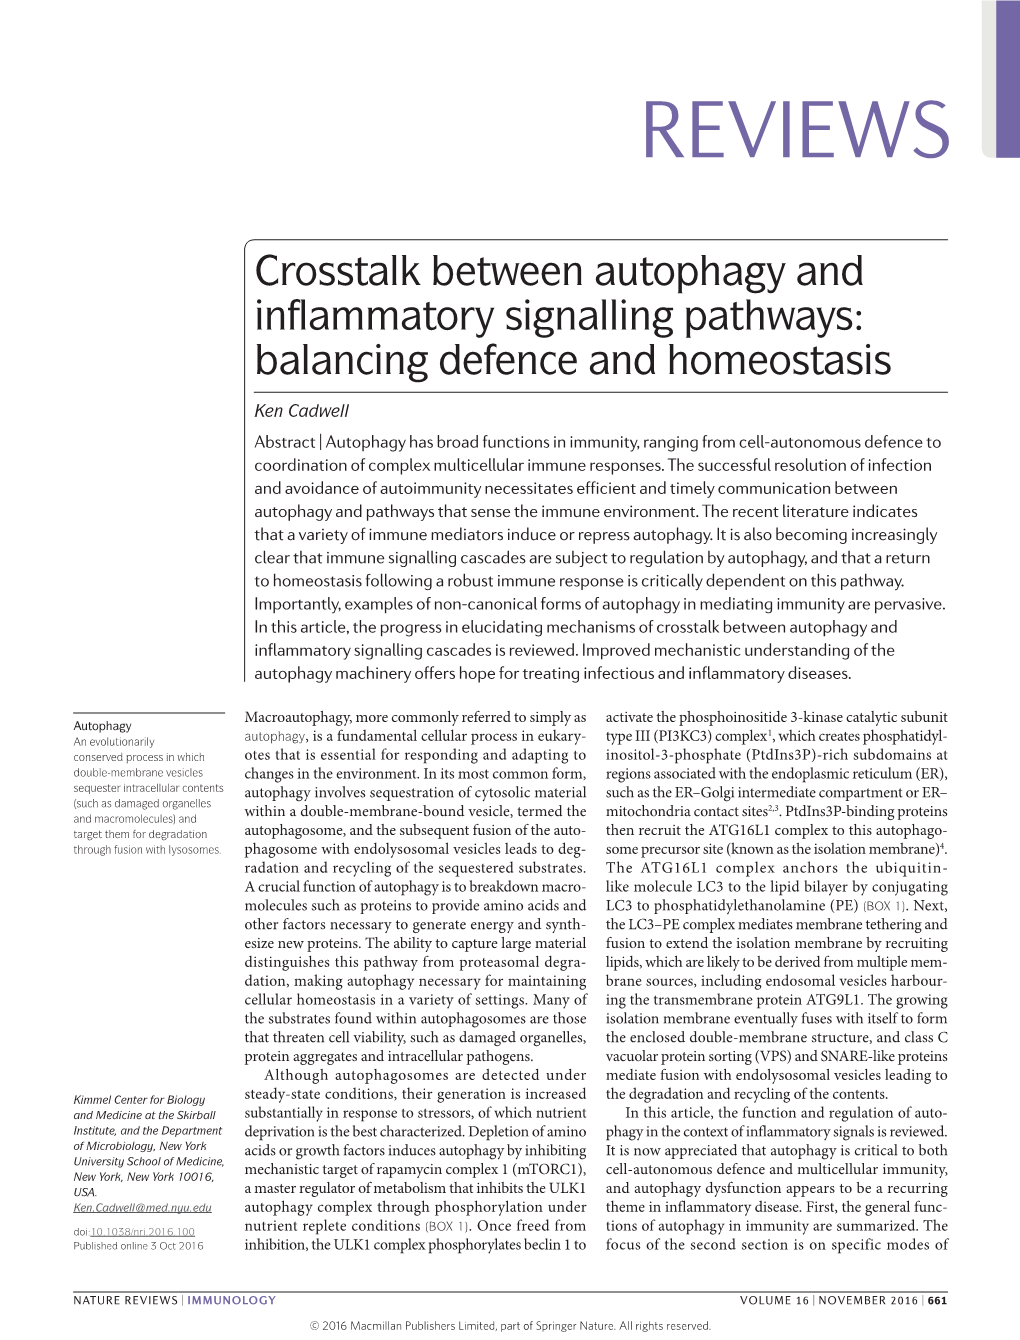 Crosstalk Between Autophagy and Inflammatory Signalling Pathways: Balancing Defence and Homeostasis